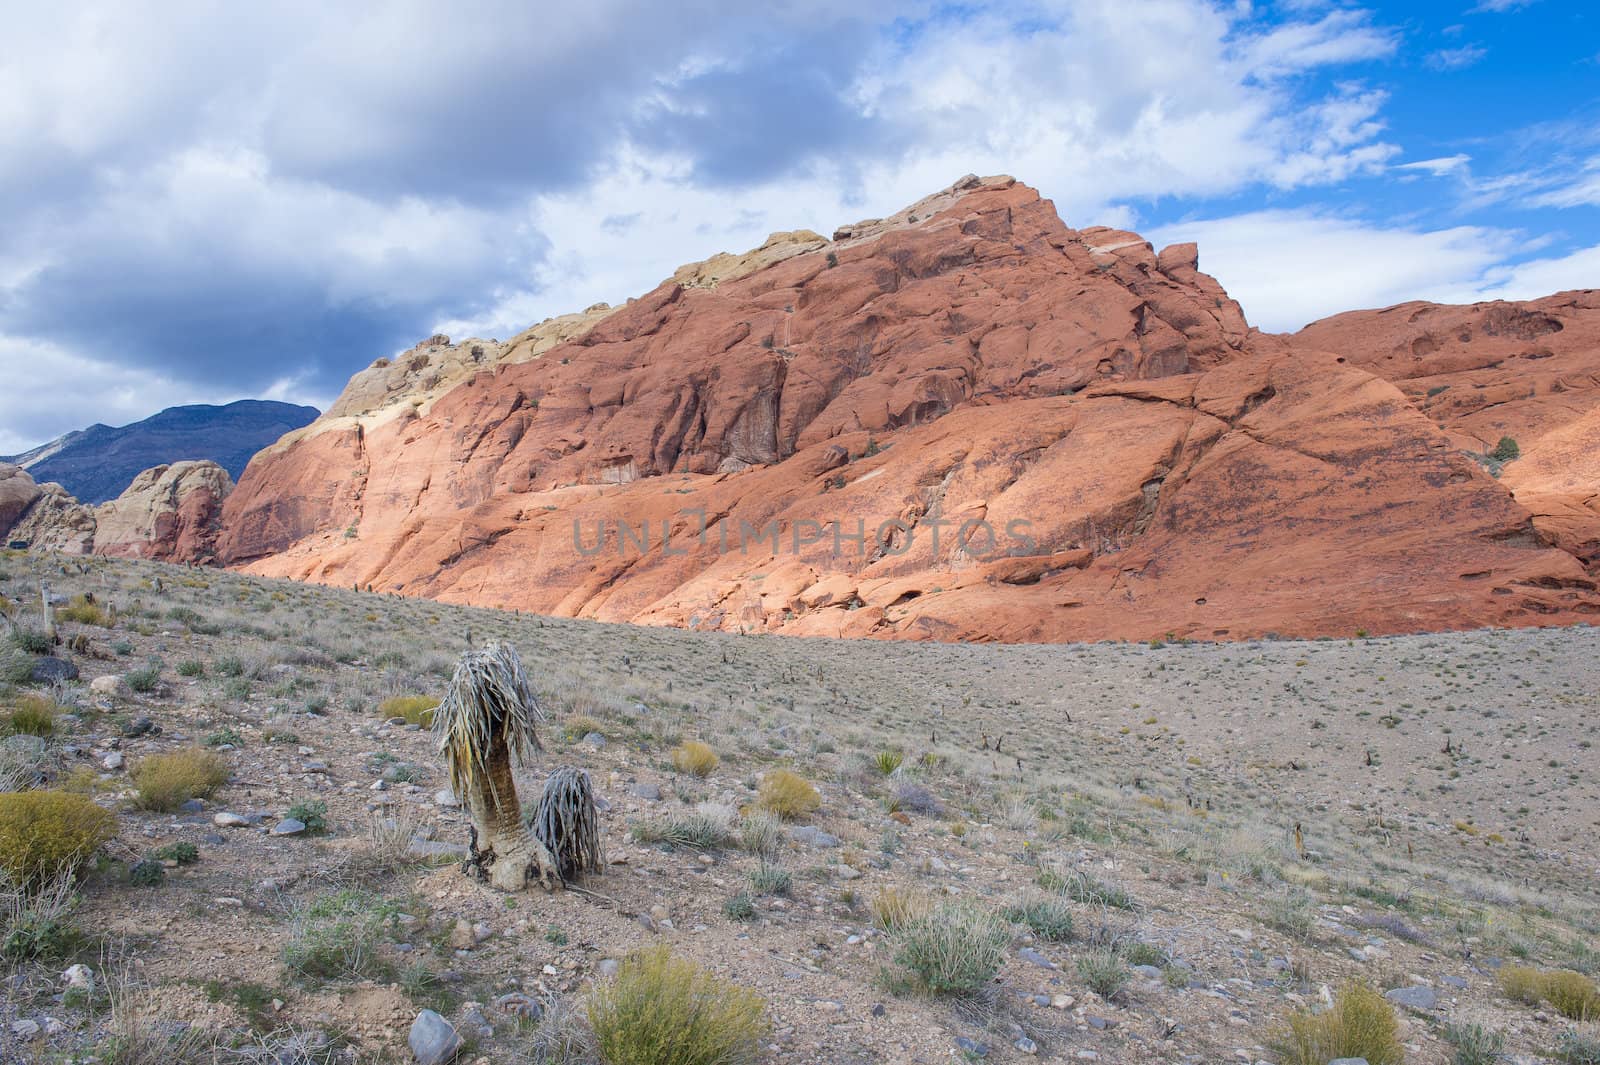  The Red Rock canyon near las vegas , Nevada.